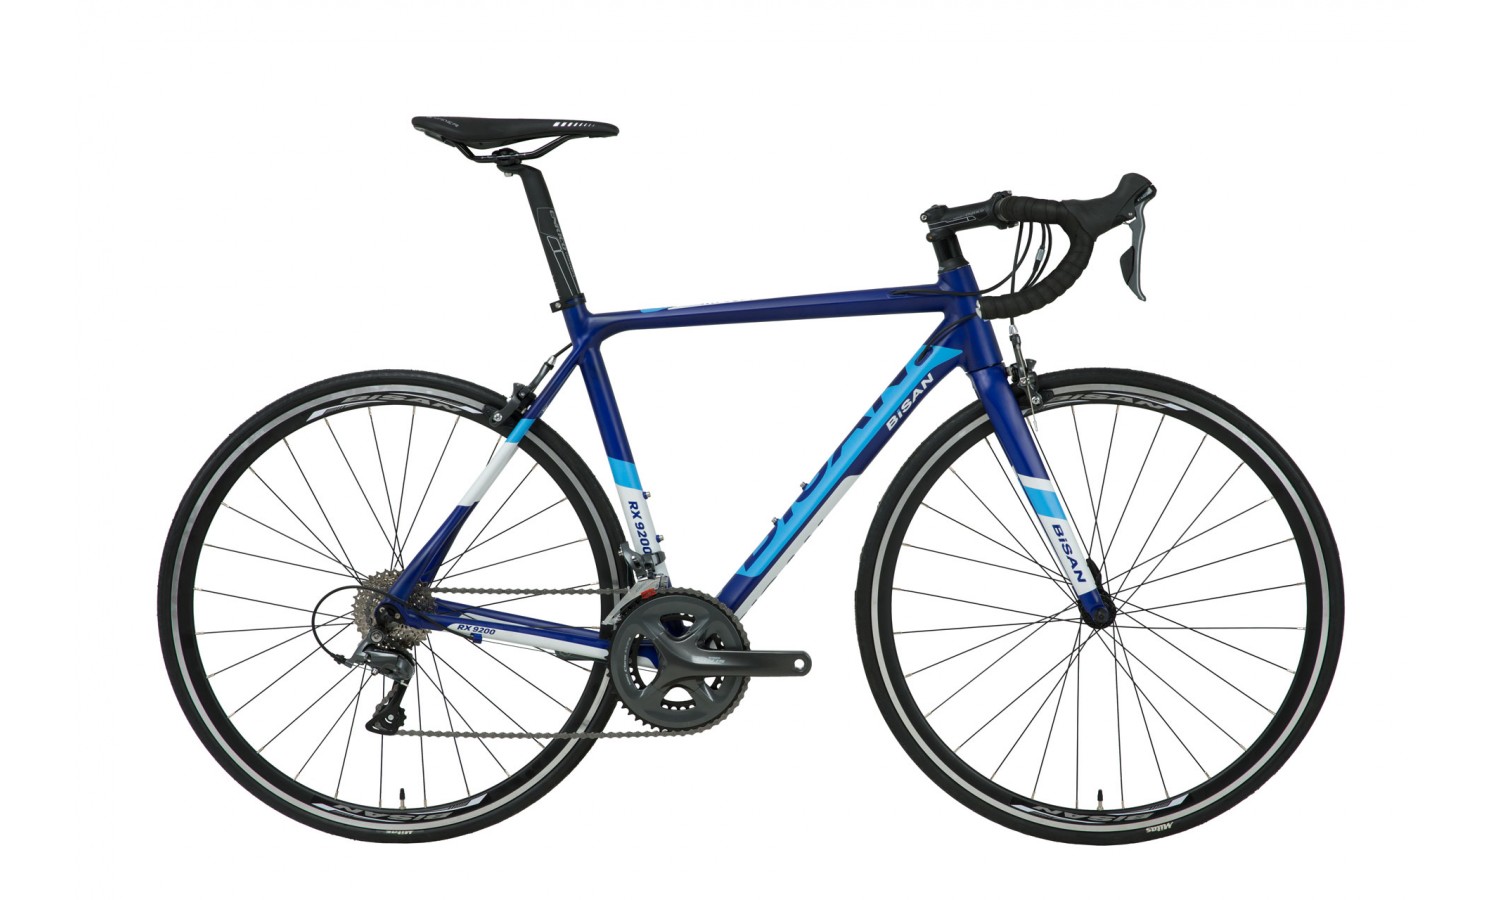 Bisan Rx 9200 28 V Yarış Bisikleti Claris (Lacivert)